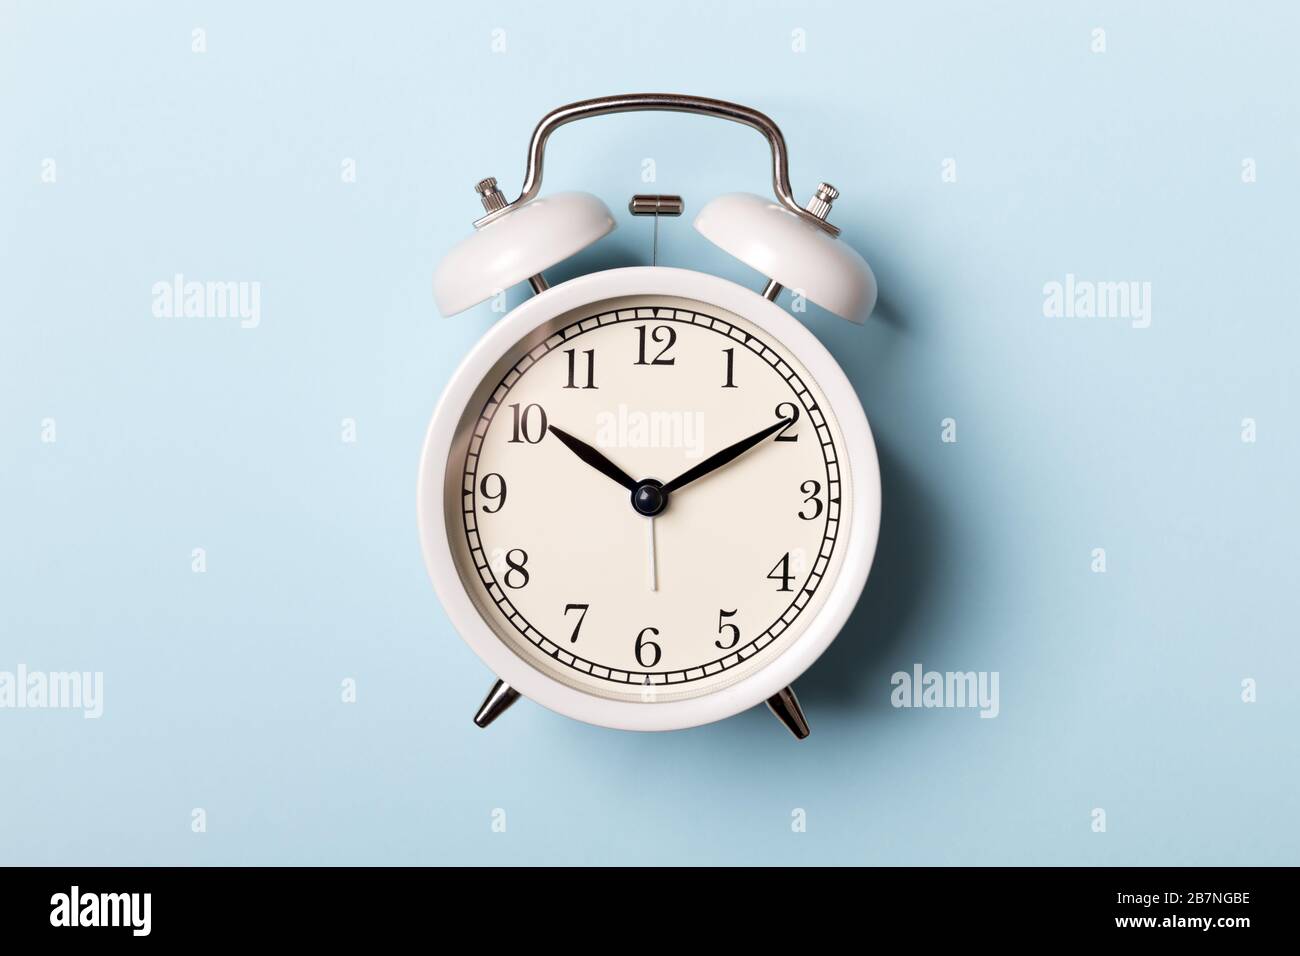 White vintage alarm clock on blue background. Time concept Stock Photo